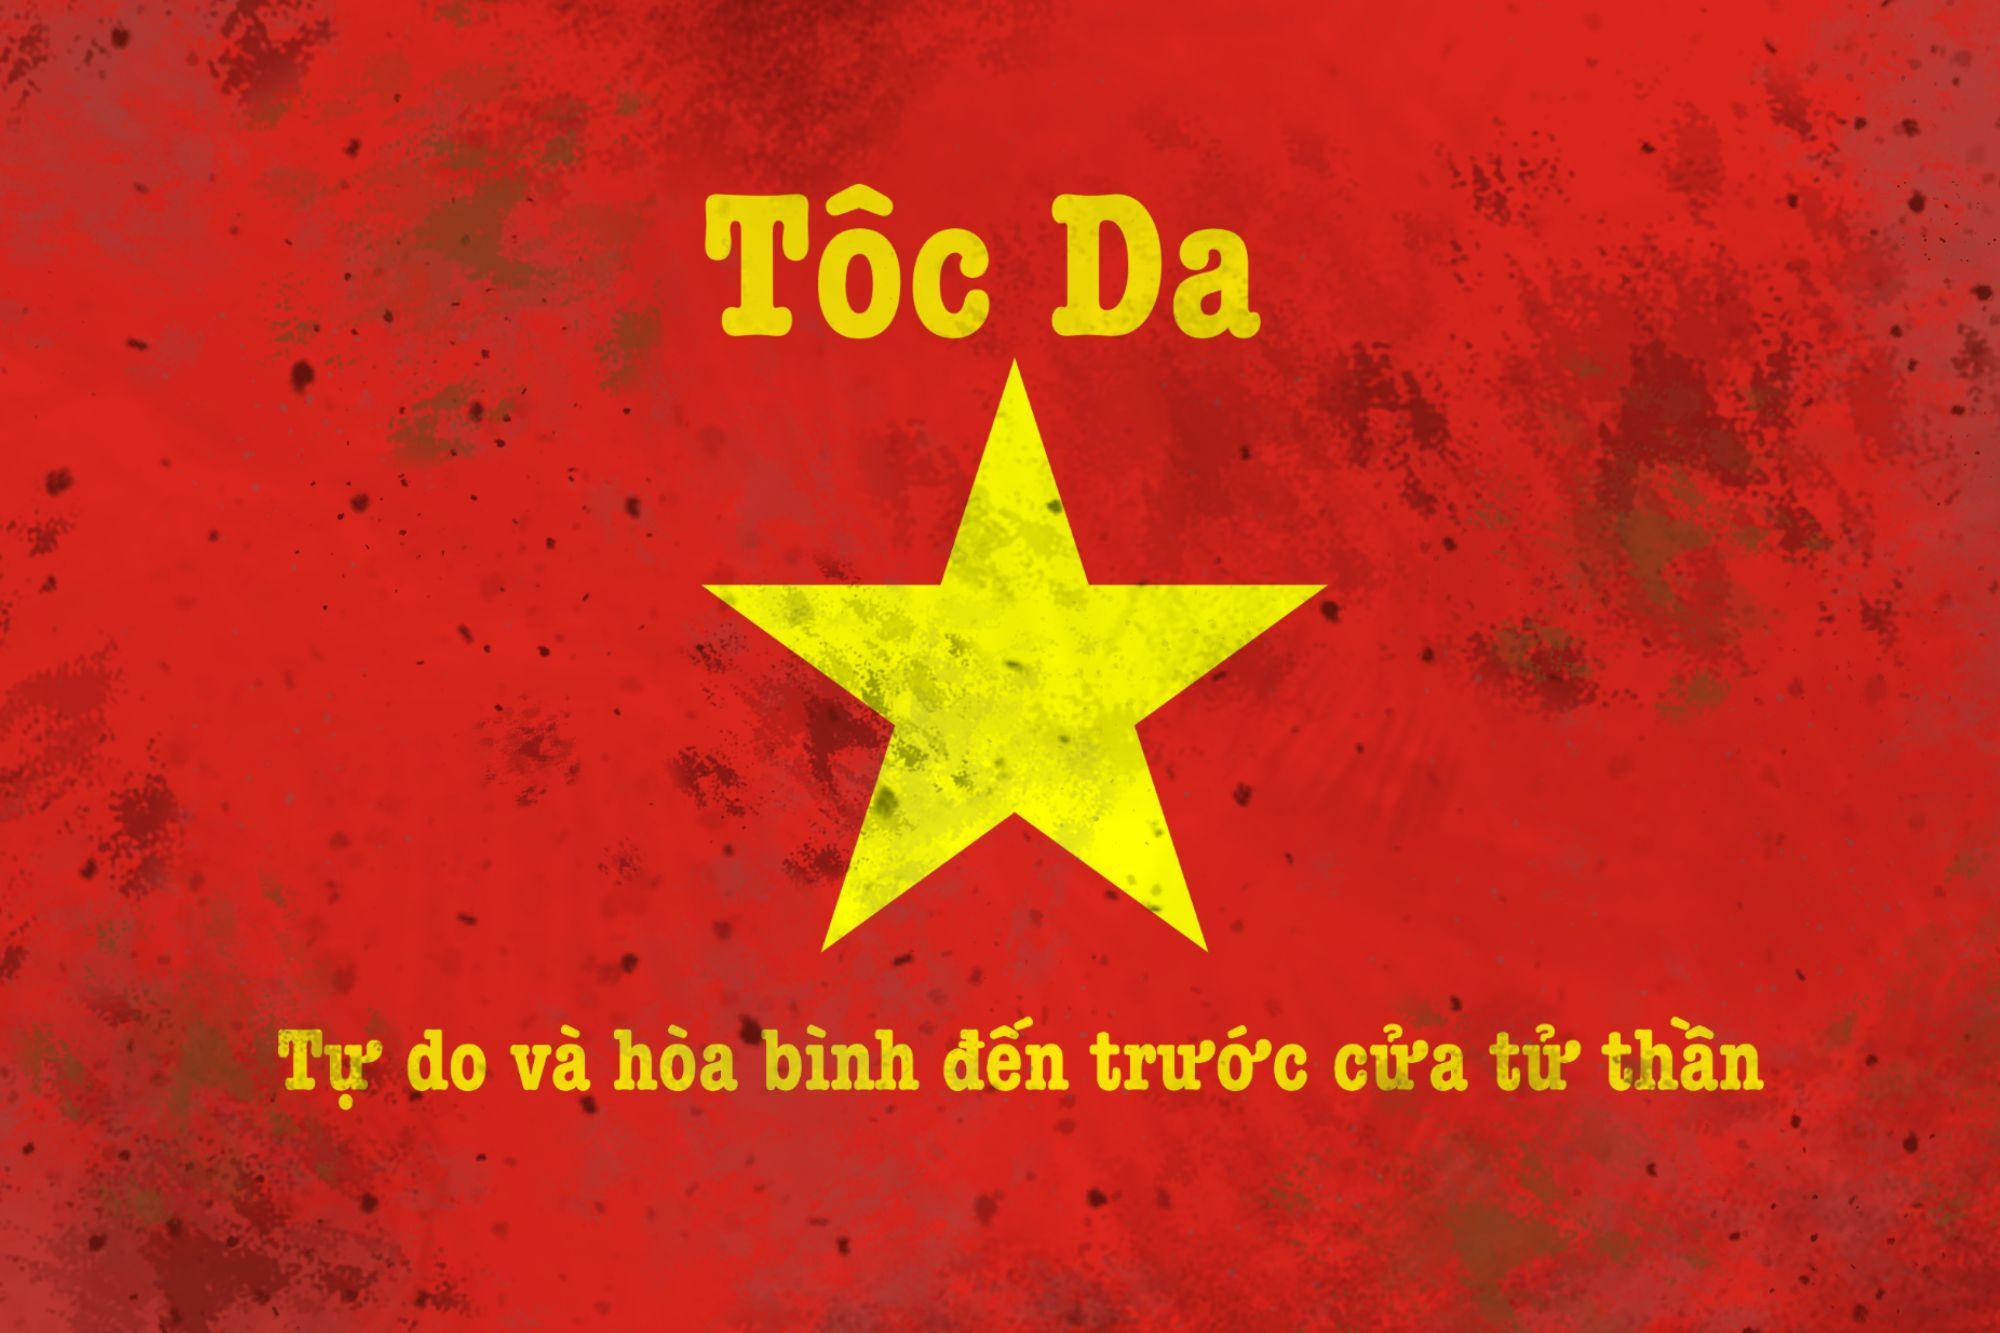 ARMA CONFLICT Vietnamese Comms